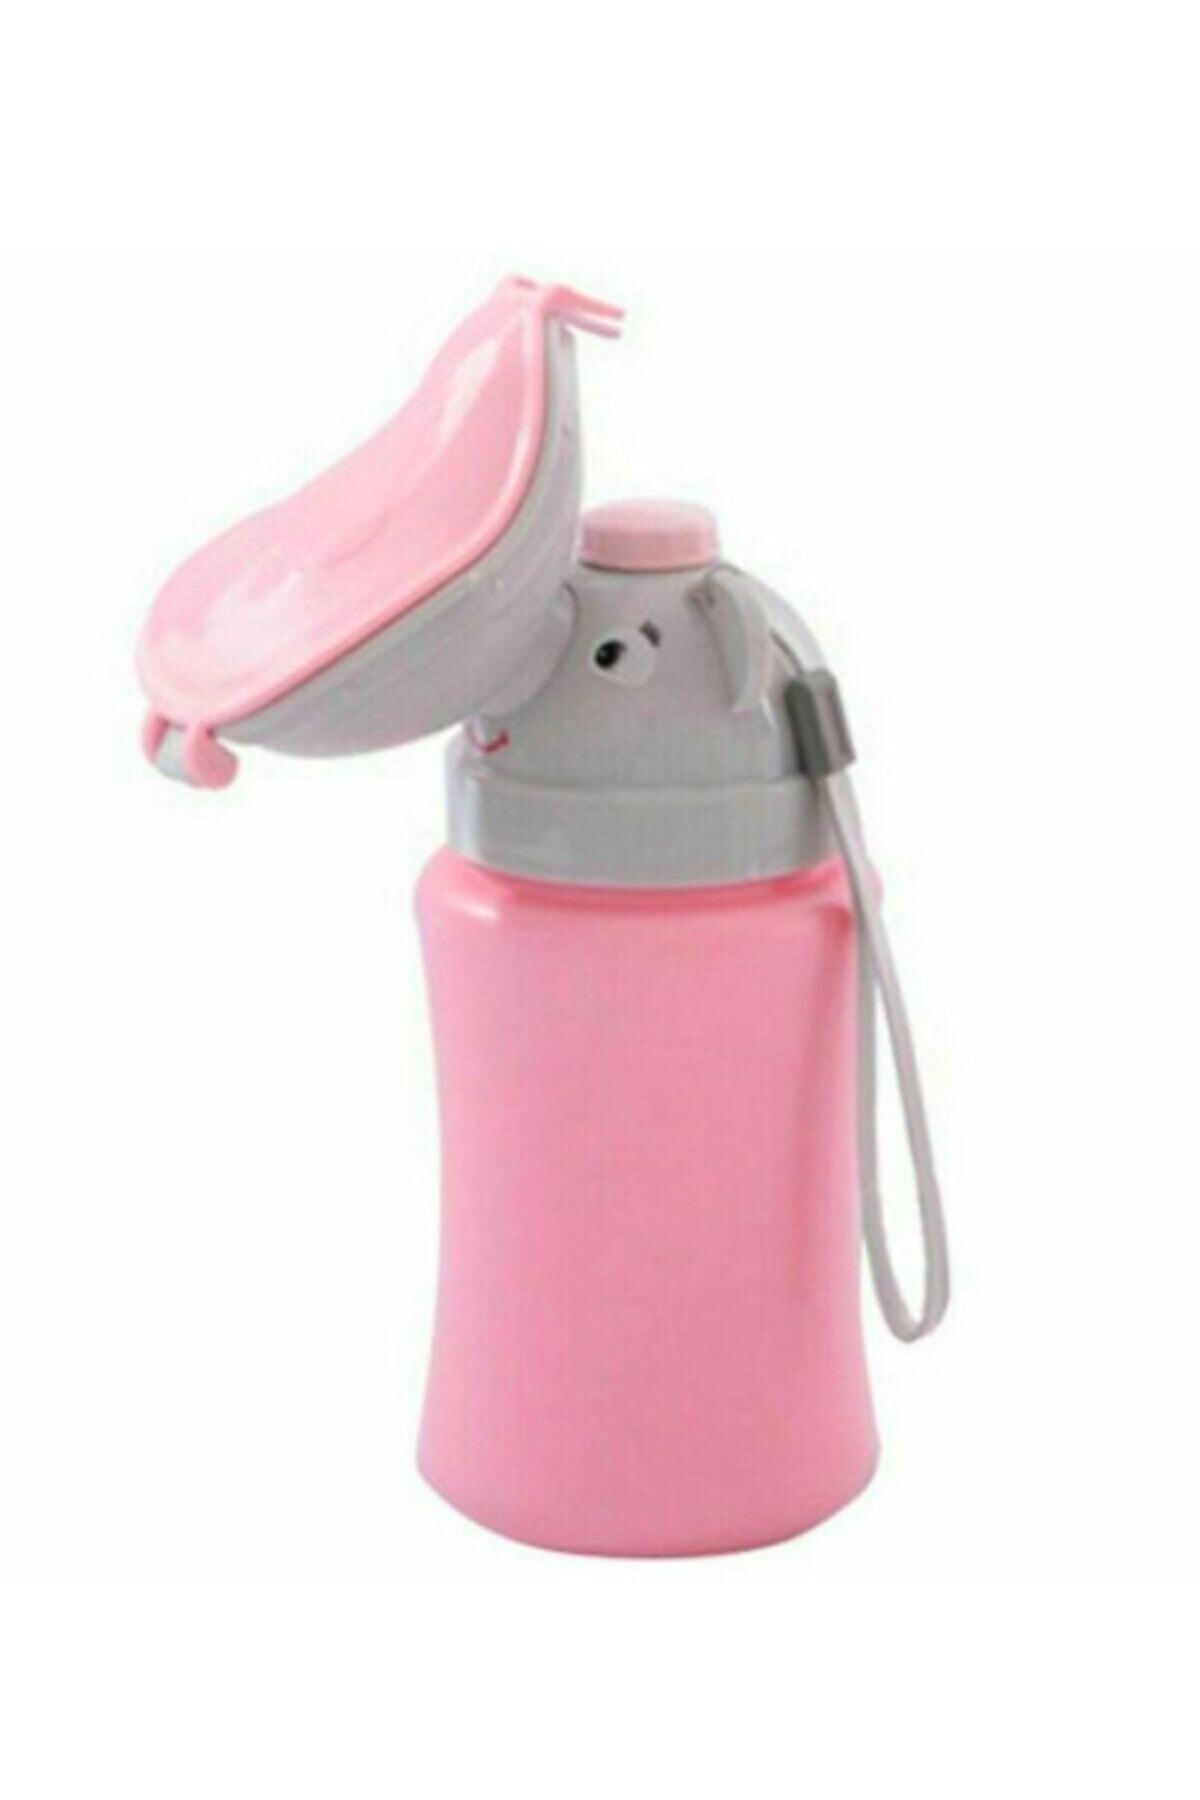 Petityu Portable Baby Girl Potty Emergency Toilet For Car And Potty Pee Training- Kız Çocuk Lazımlık